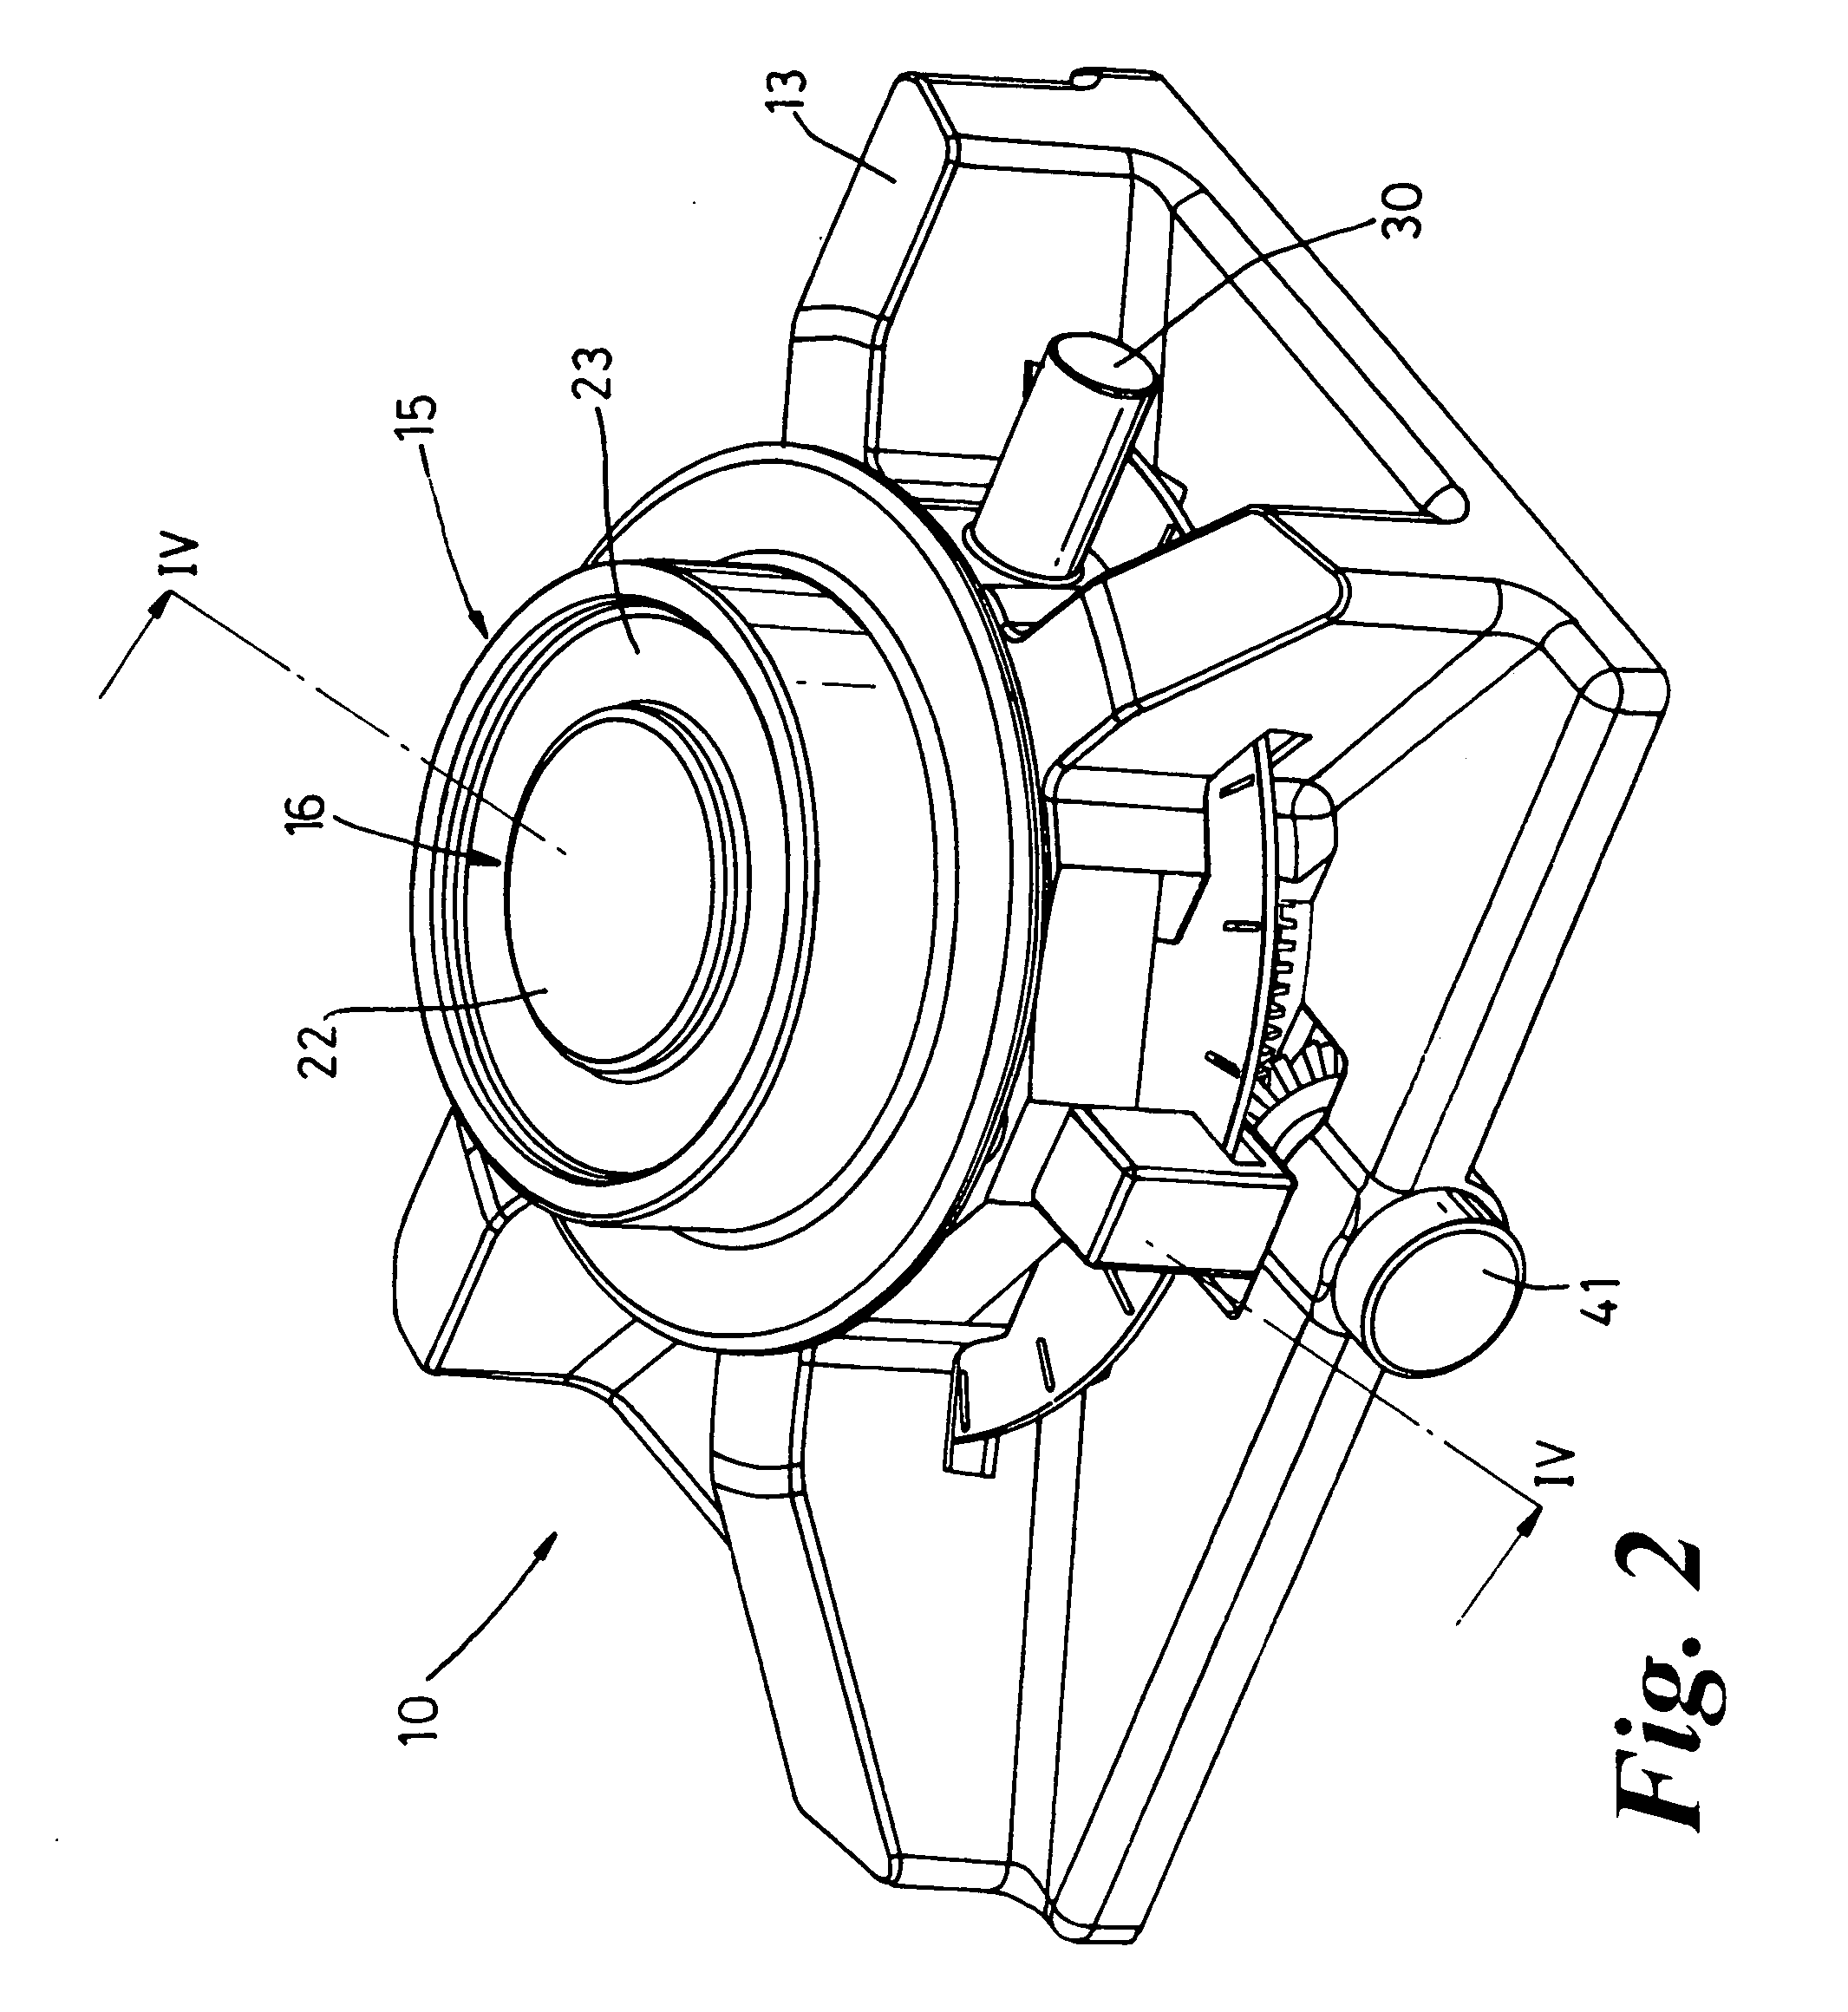 Selector mechanism for a motor vehicle transmission